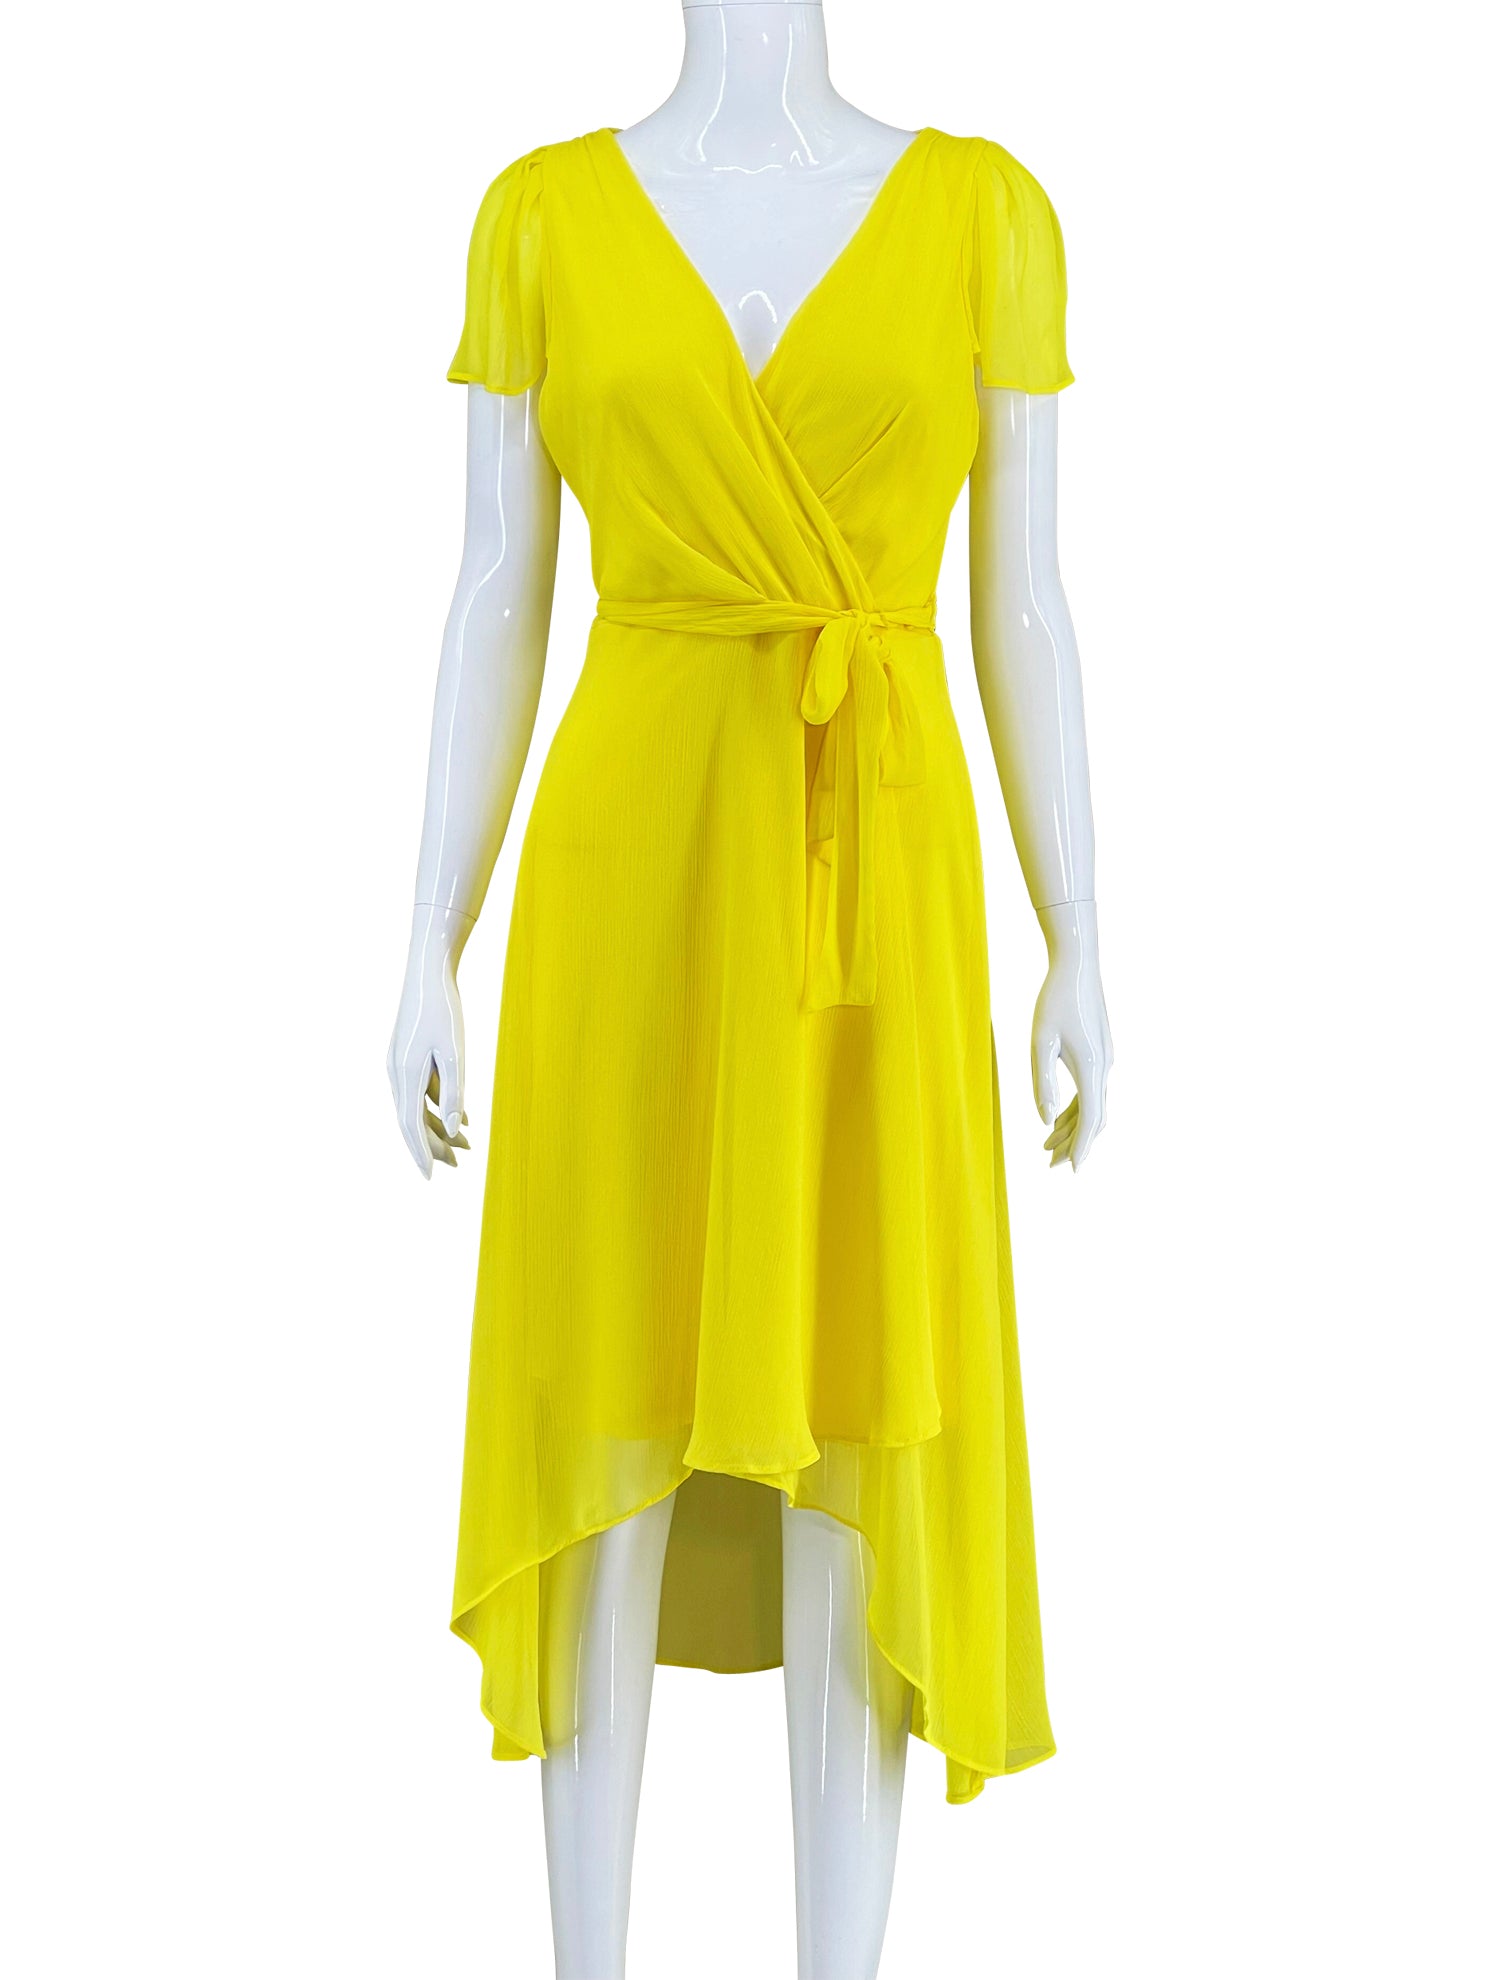 DKNY Yellow Wrap Dress